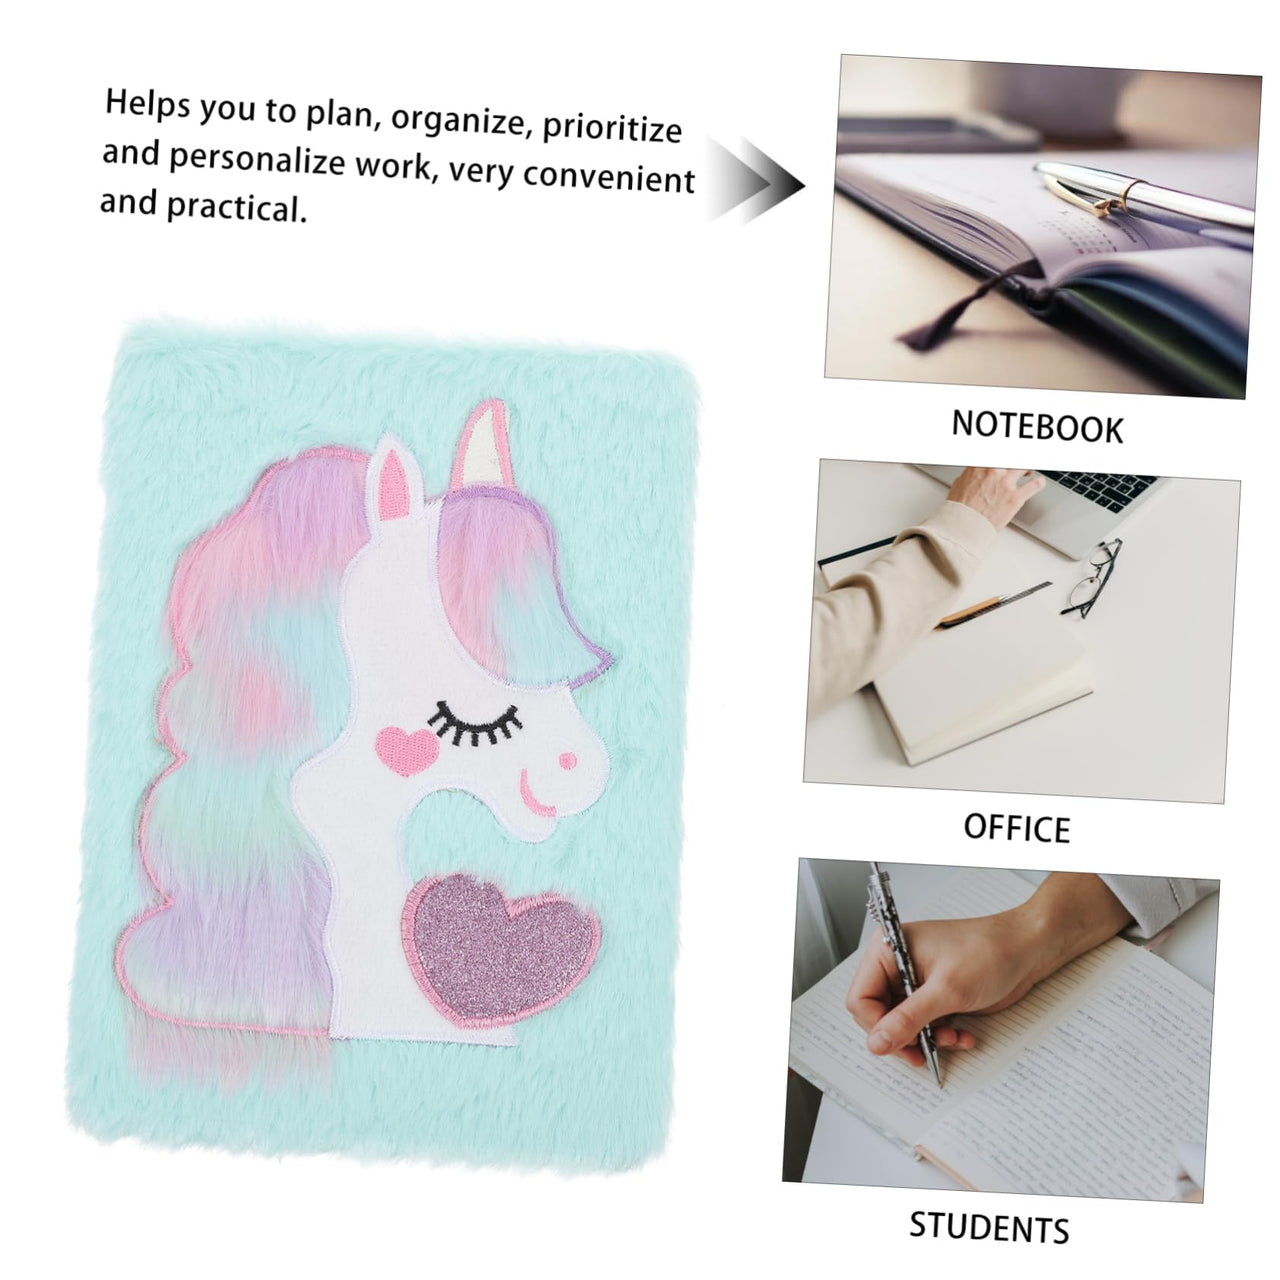 Unicorn Cartoon Plush Cover Notebook